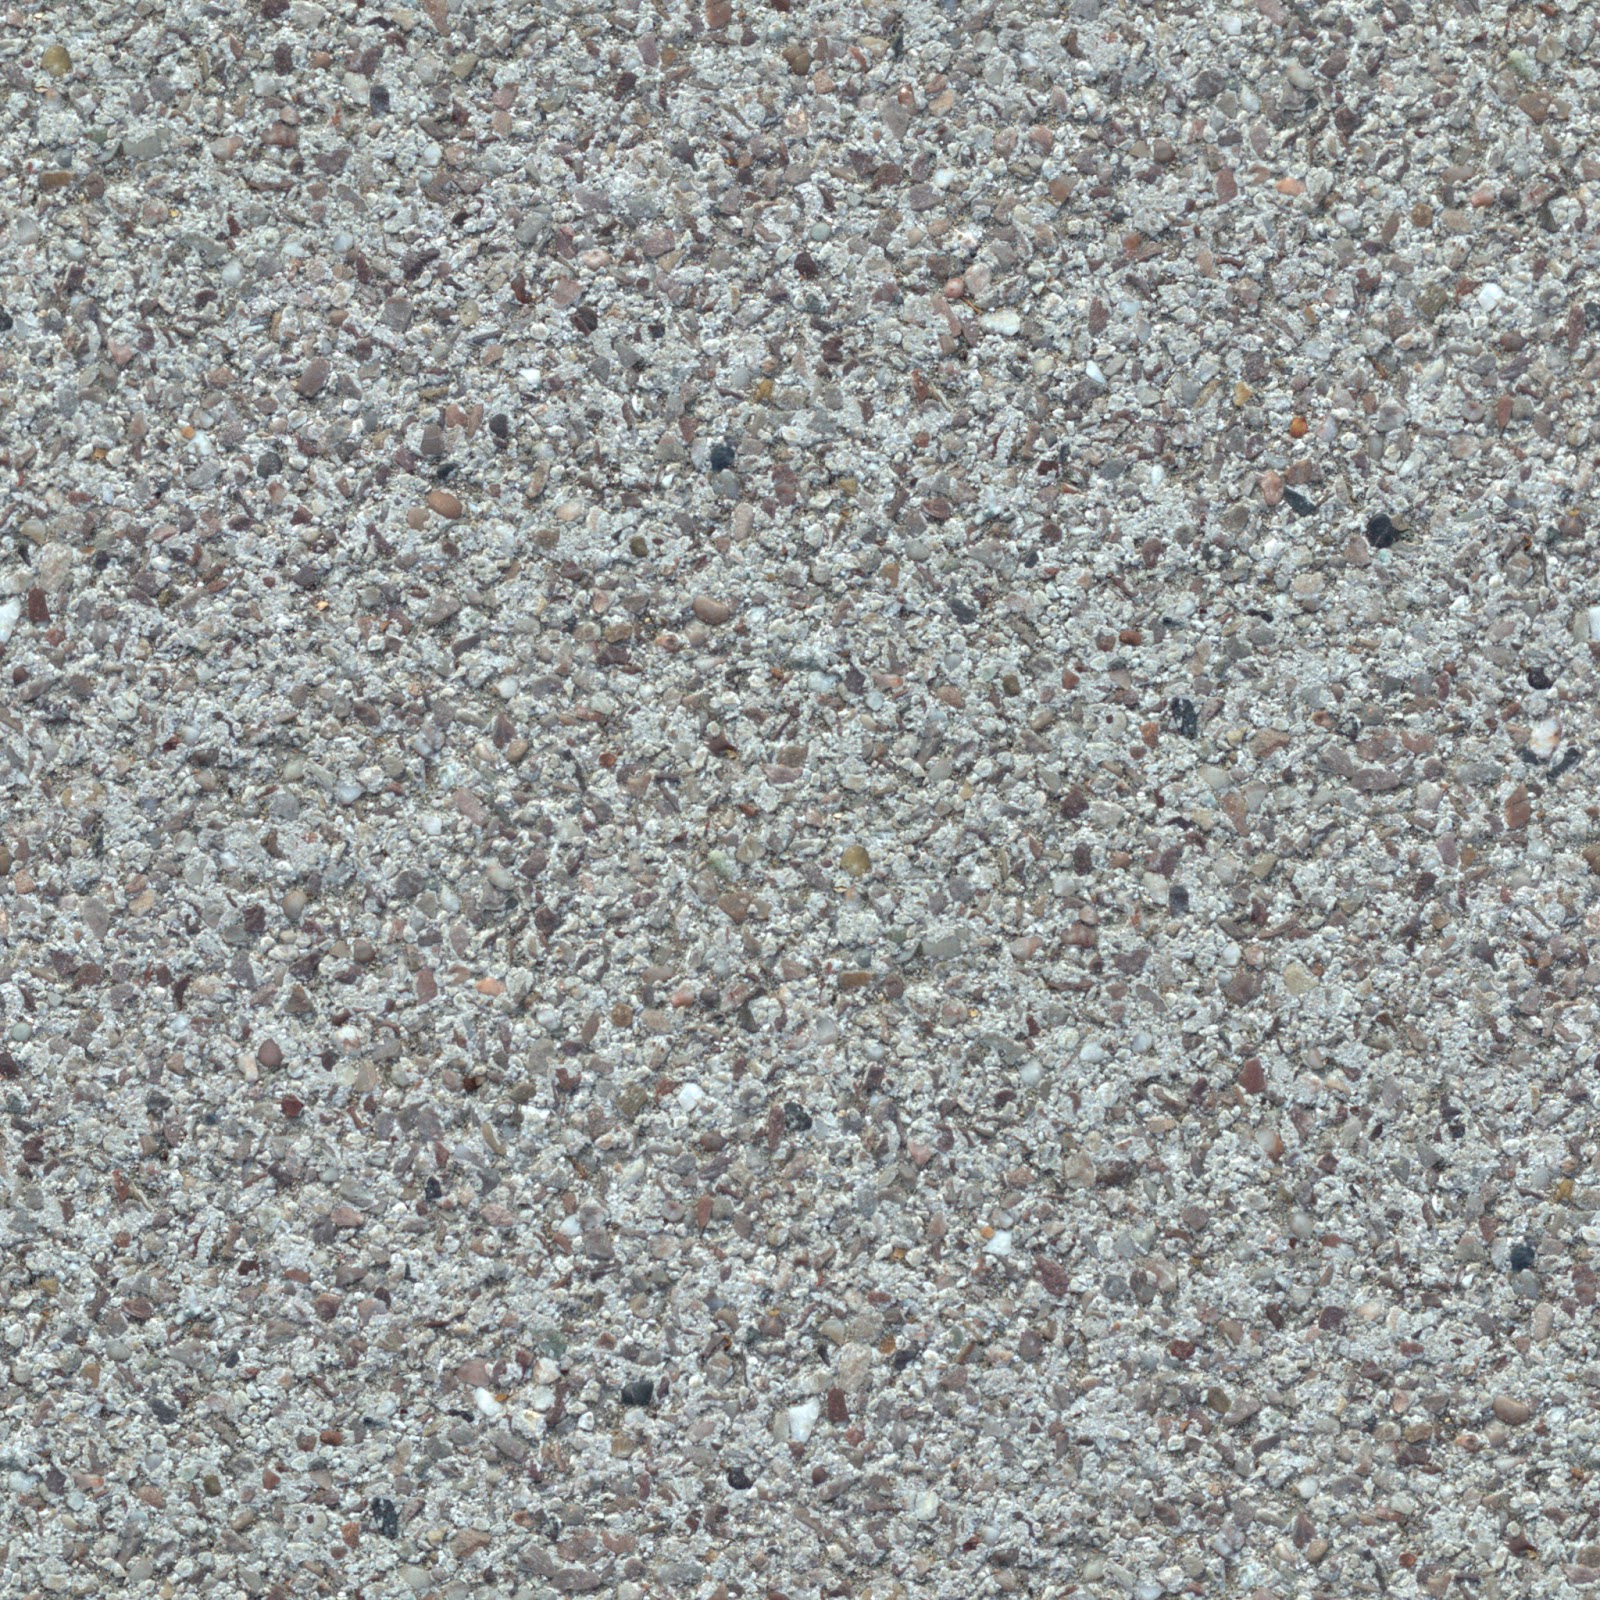 High Resolution Seamless Textures: Concrete flat stone texture 4770x3178